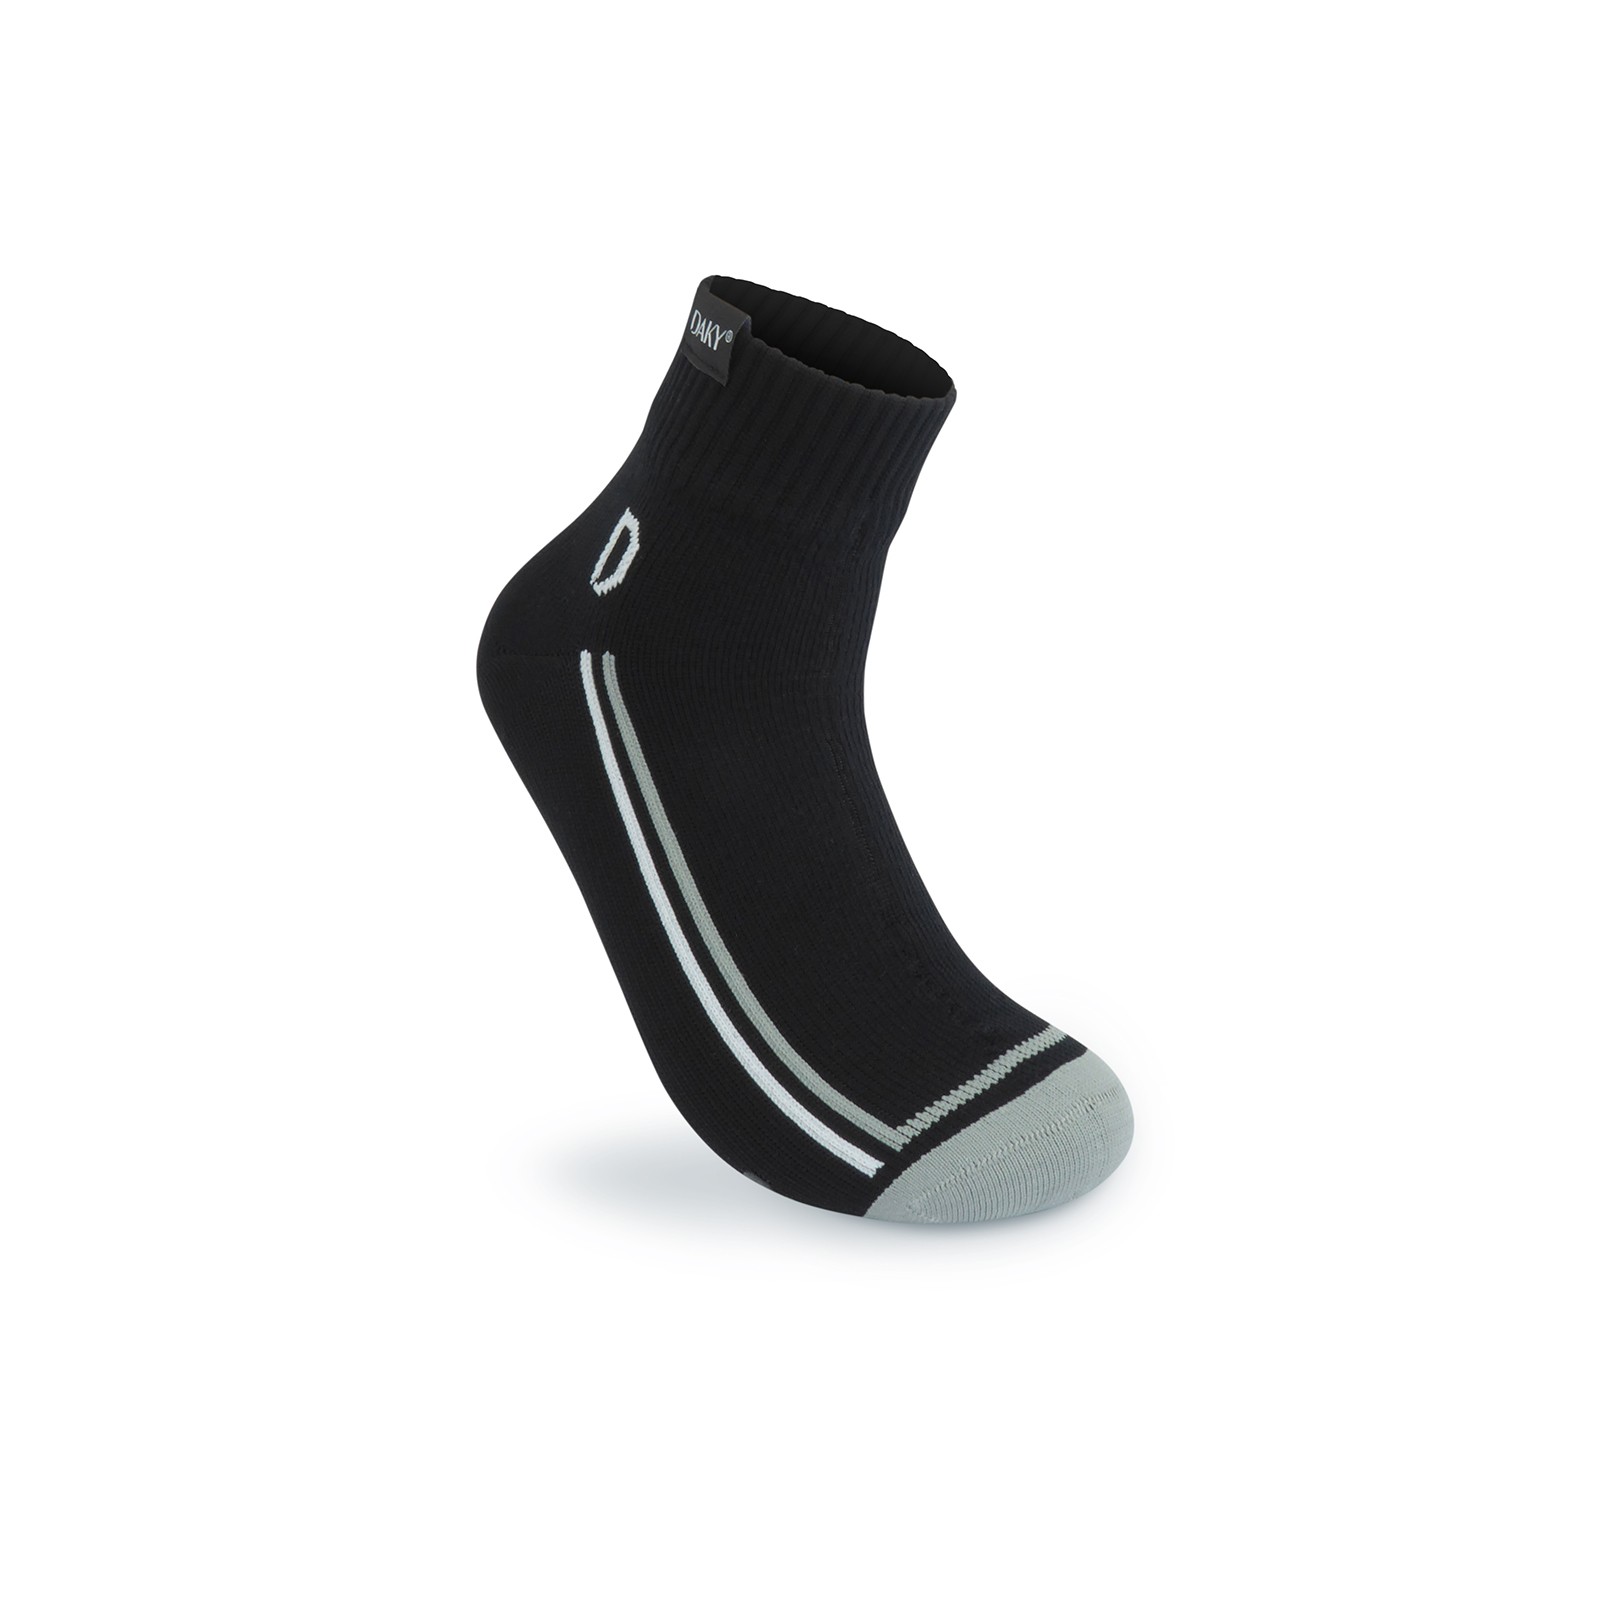 High Performance outdoor sports socks Waterproof sports kit for every activity DAKY Waterproof Socks Wudu Compliant